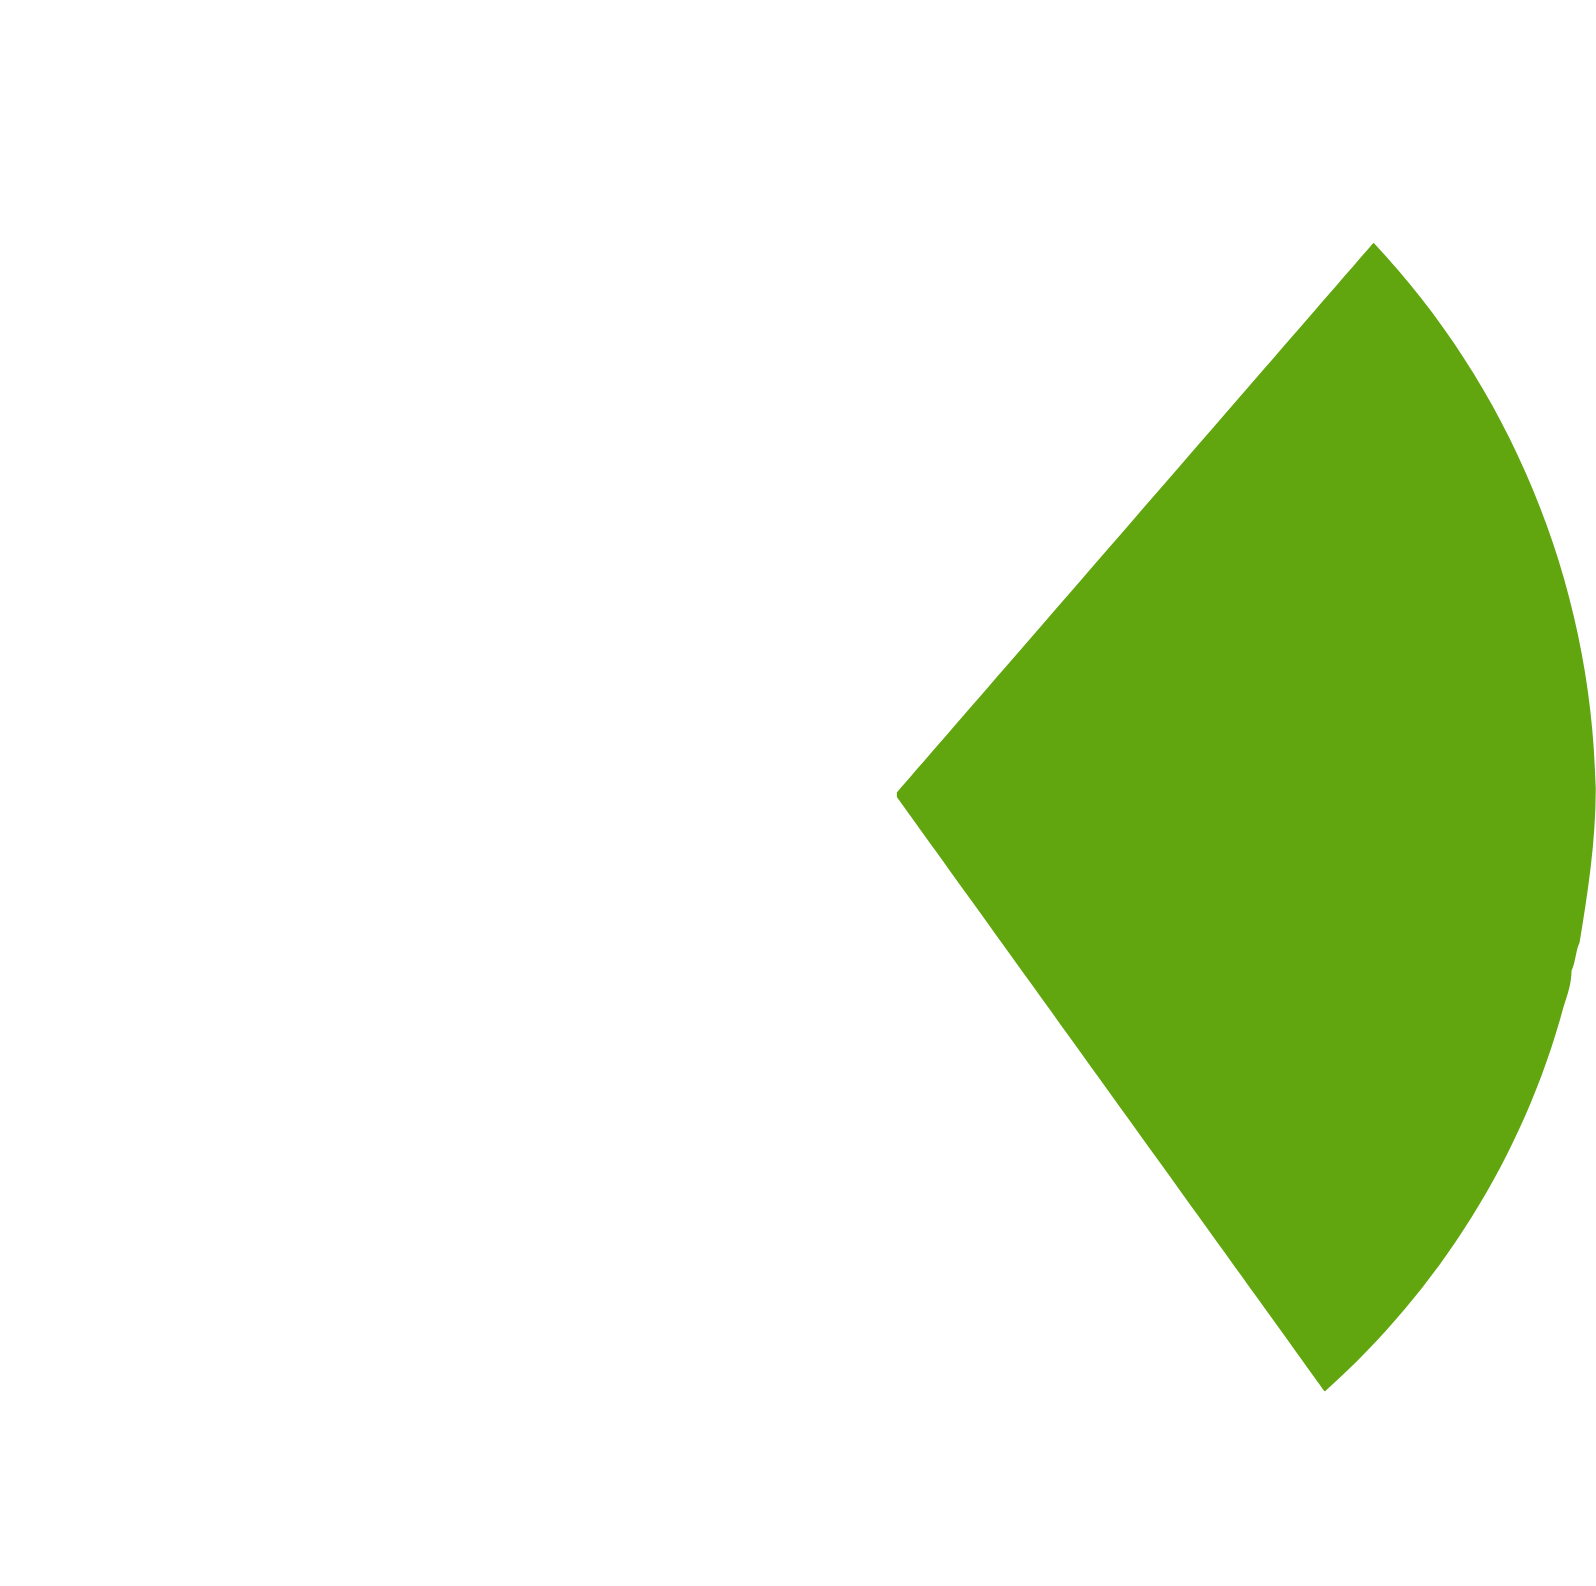 Cepton logo for dark backgrounds (transparent PNG)